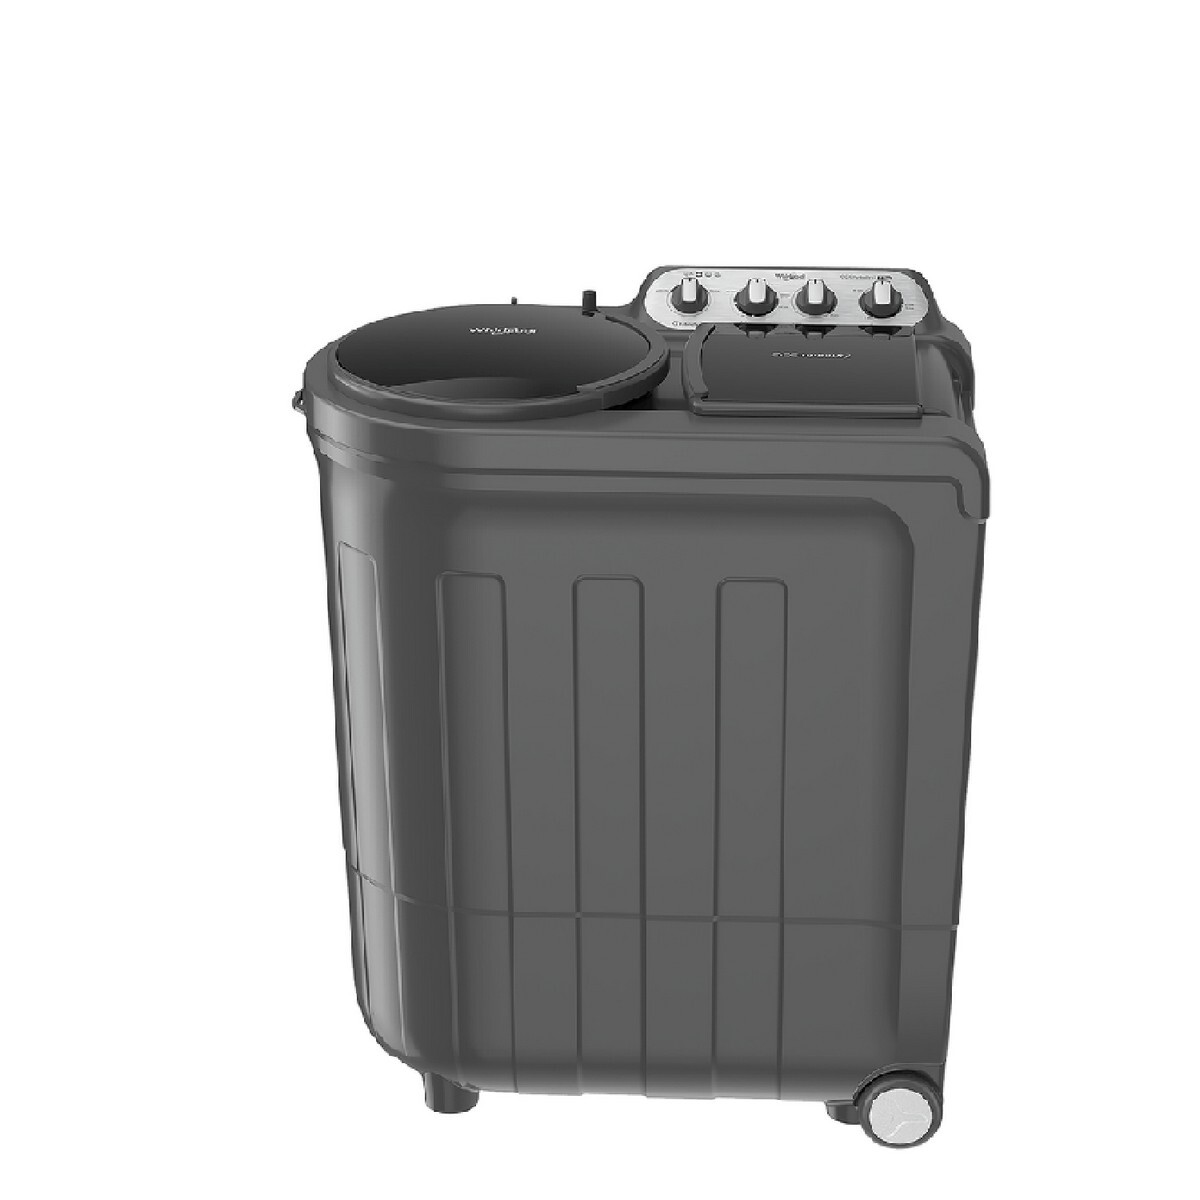 Whirlpool 7.5 Kg 5 Star Semi-Automatic Top Loading Washing Machine ACE 7.5 SUPREME Grey Dazzle